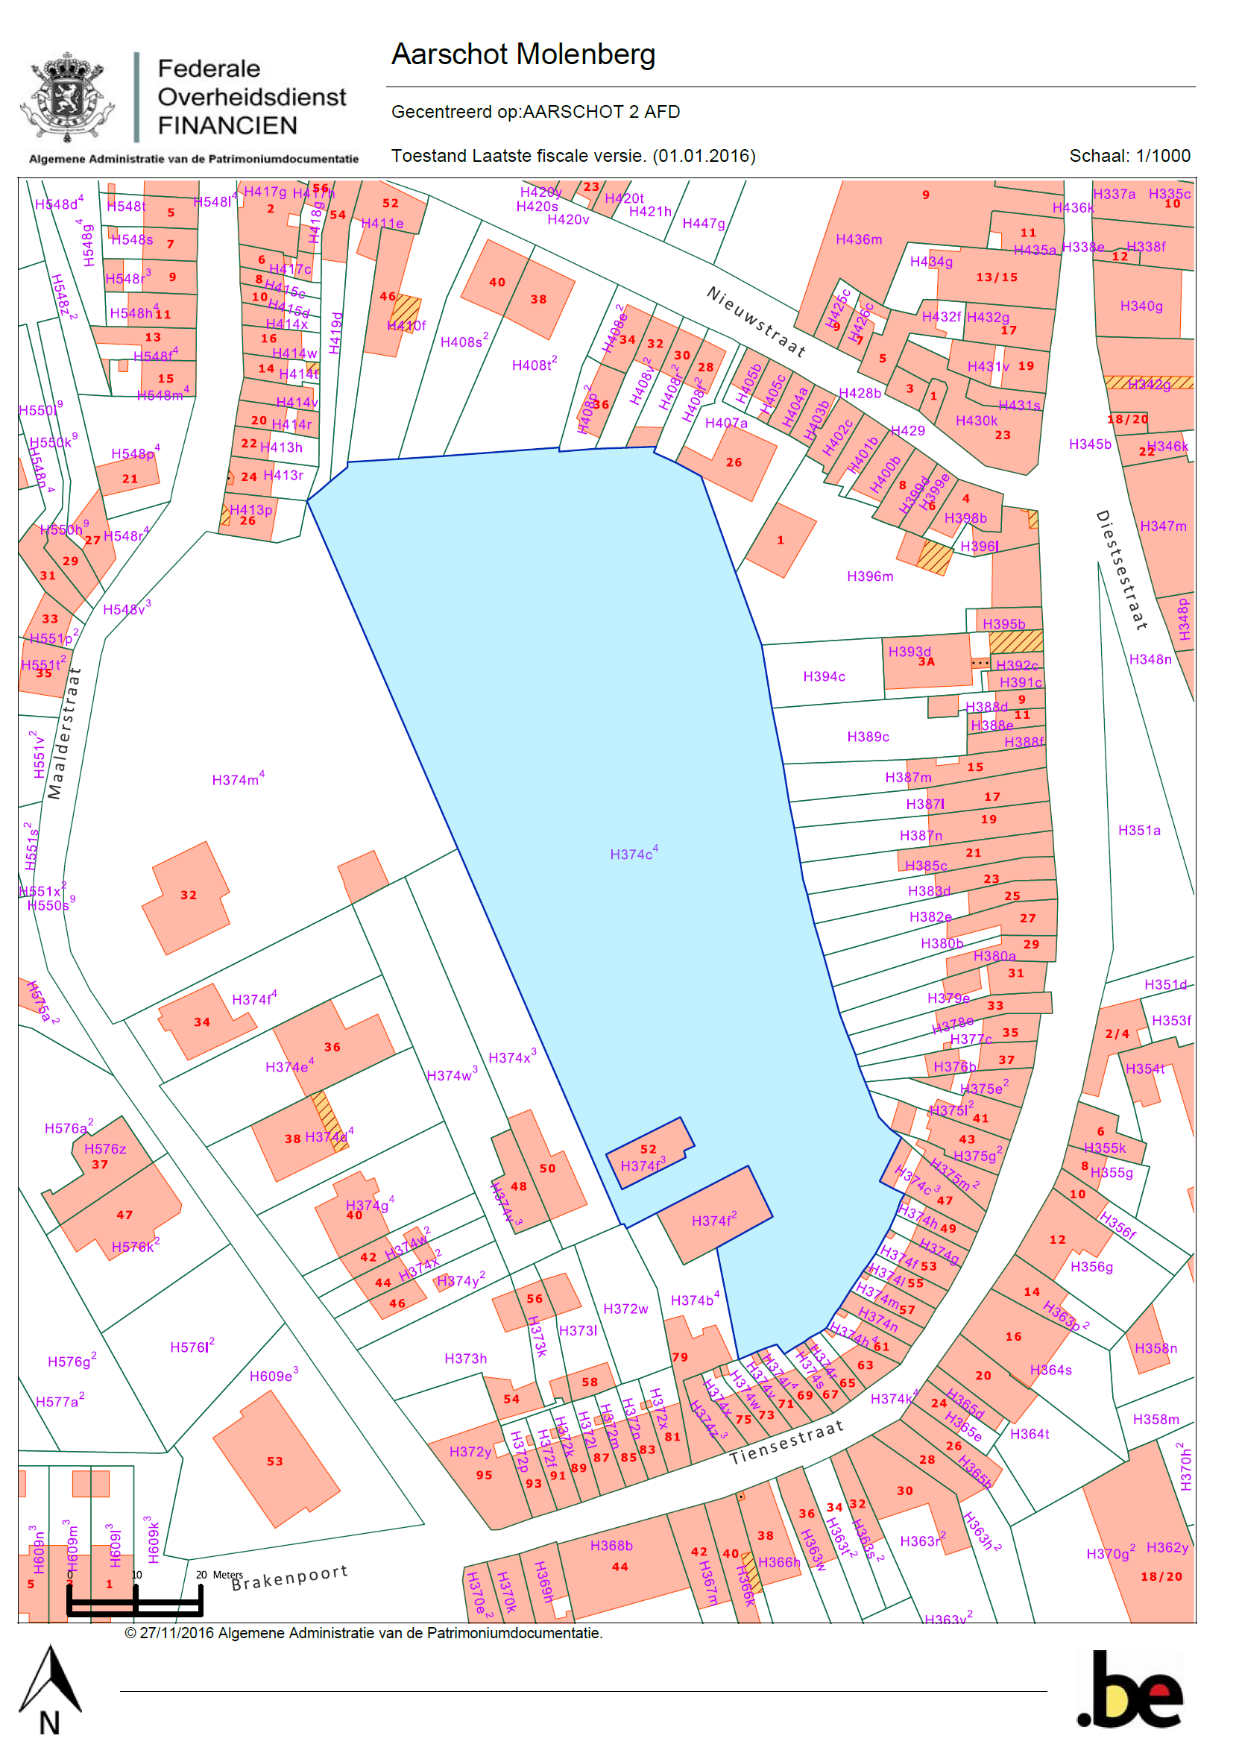 Kadastrale gegevens en plan met afbakening Kadastrale ligging van het projectgebied: Aarschot, afdeling 2 sectie H, perceel